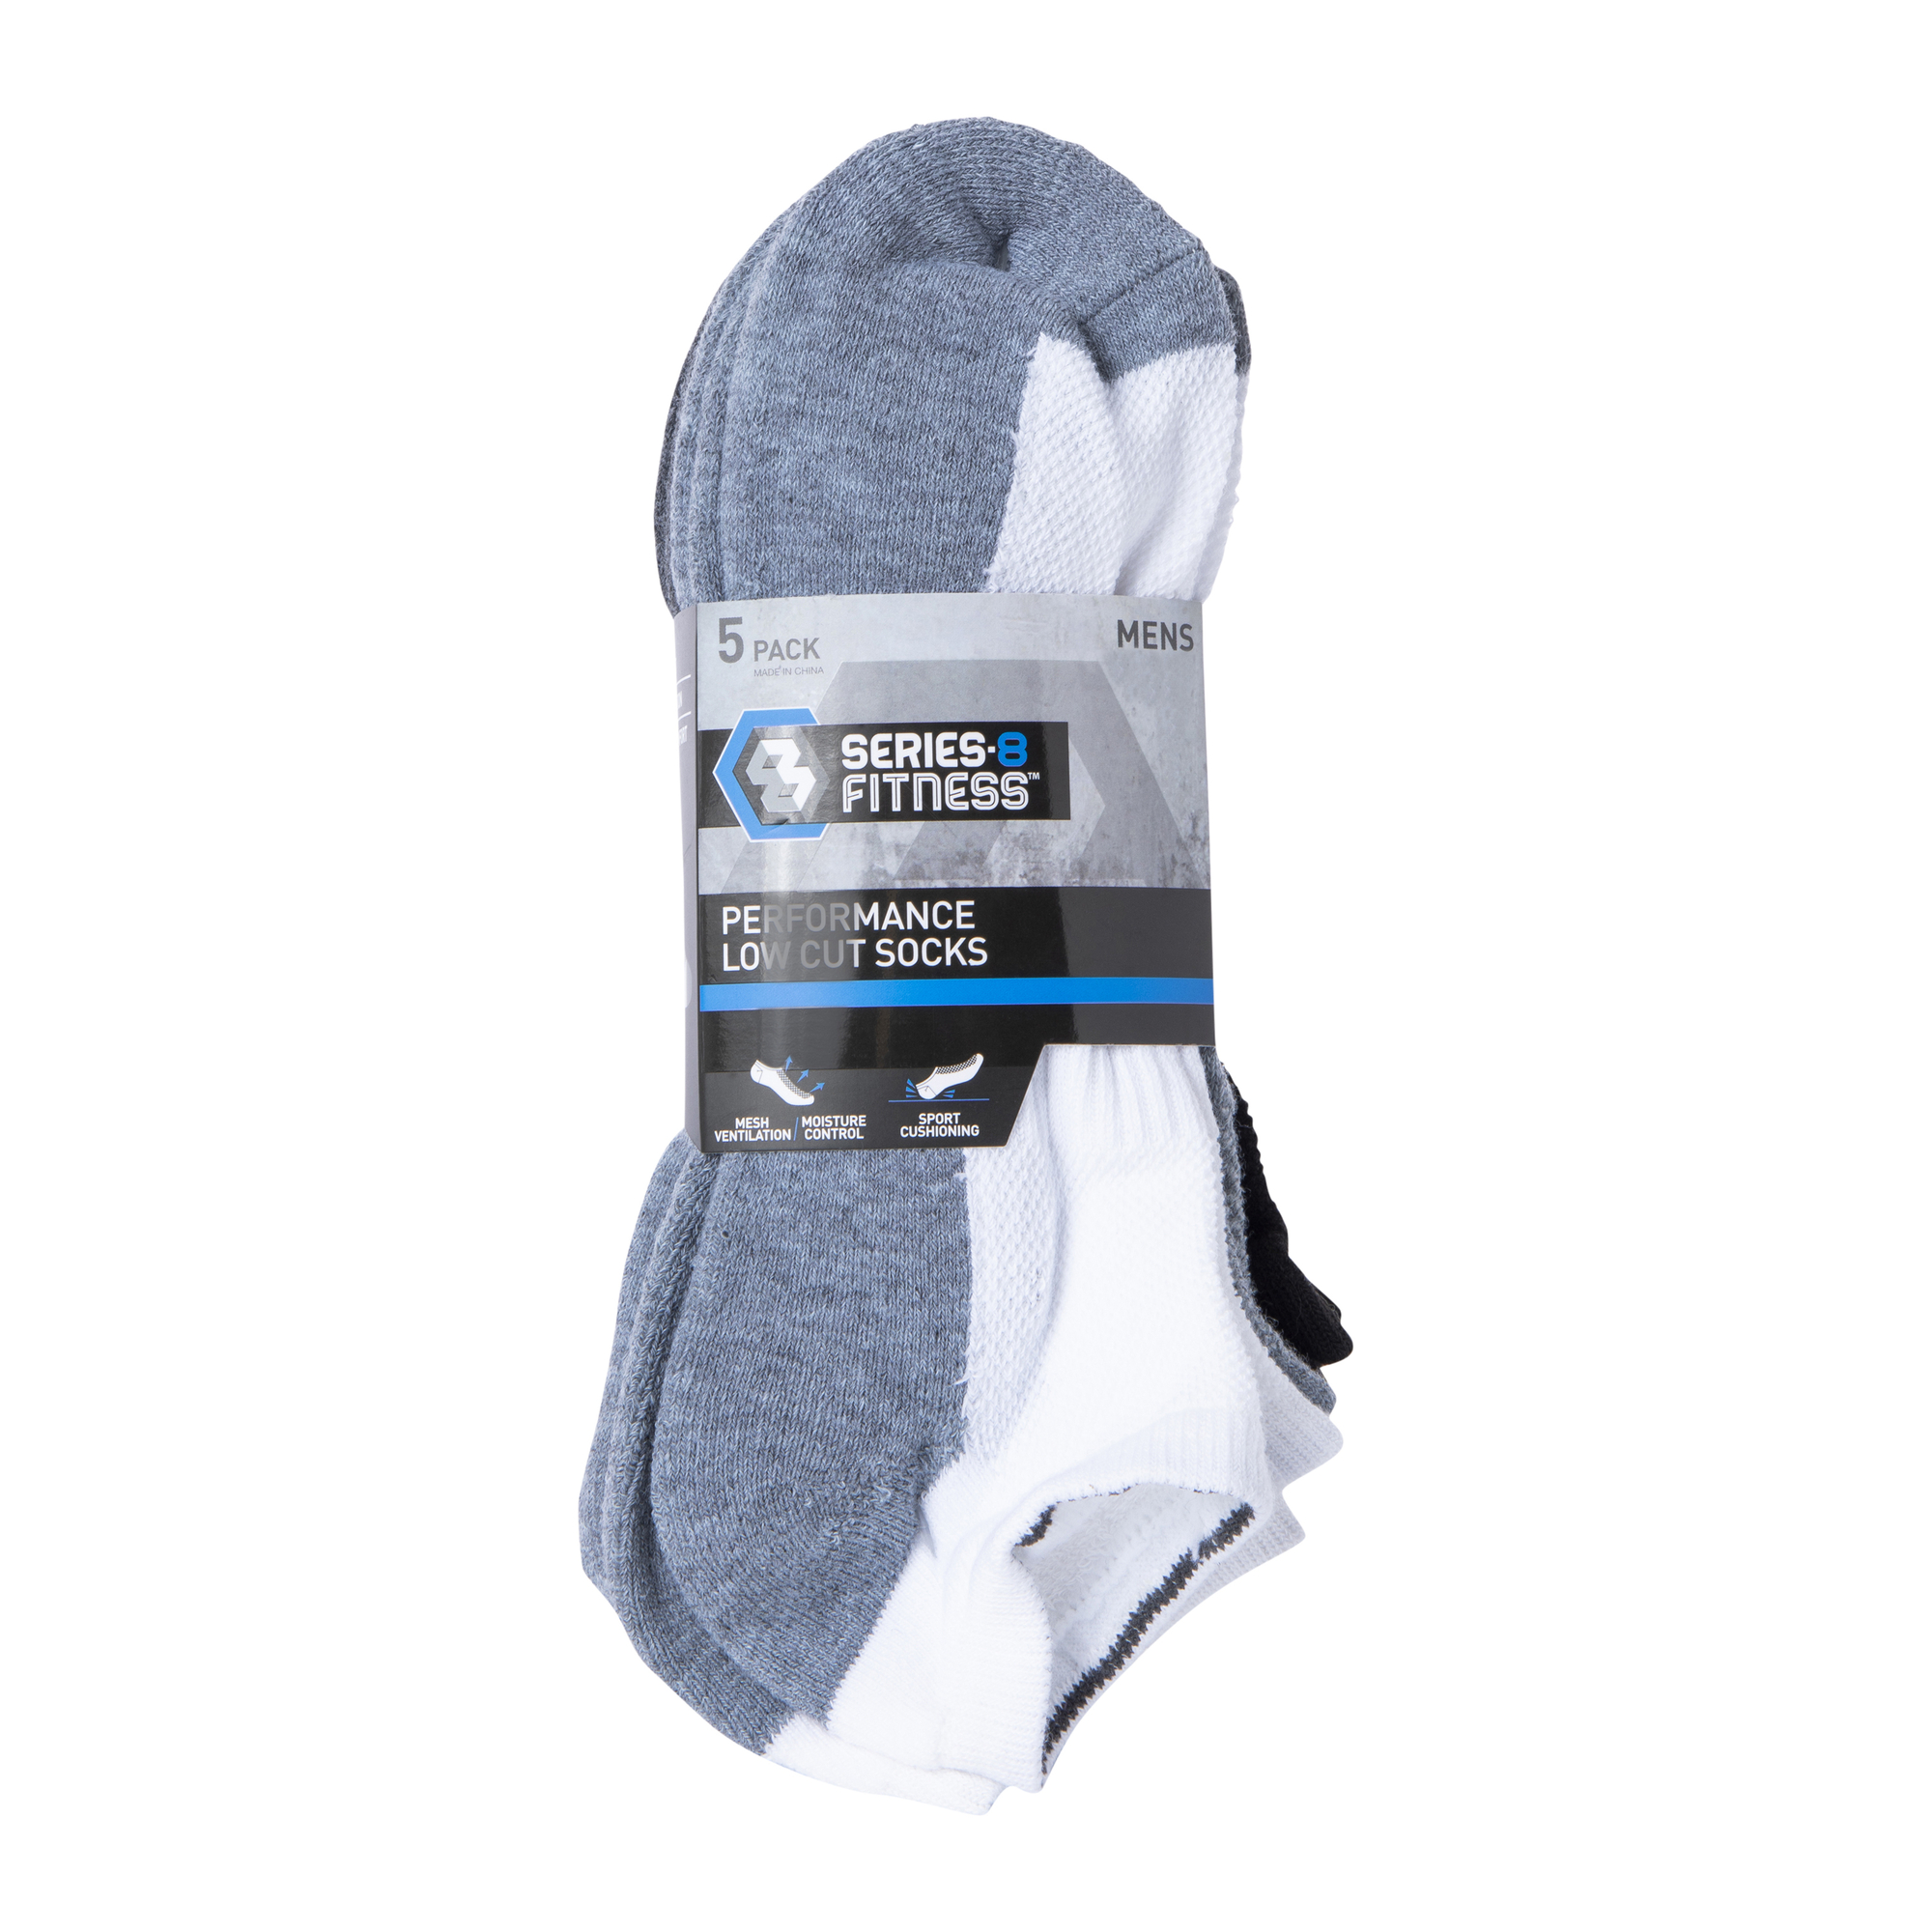 series-8 fitness™ men's low-cut performance socks 5-pack